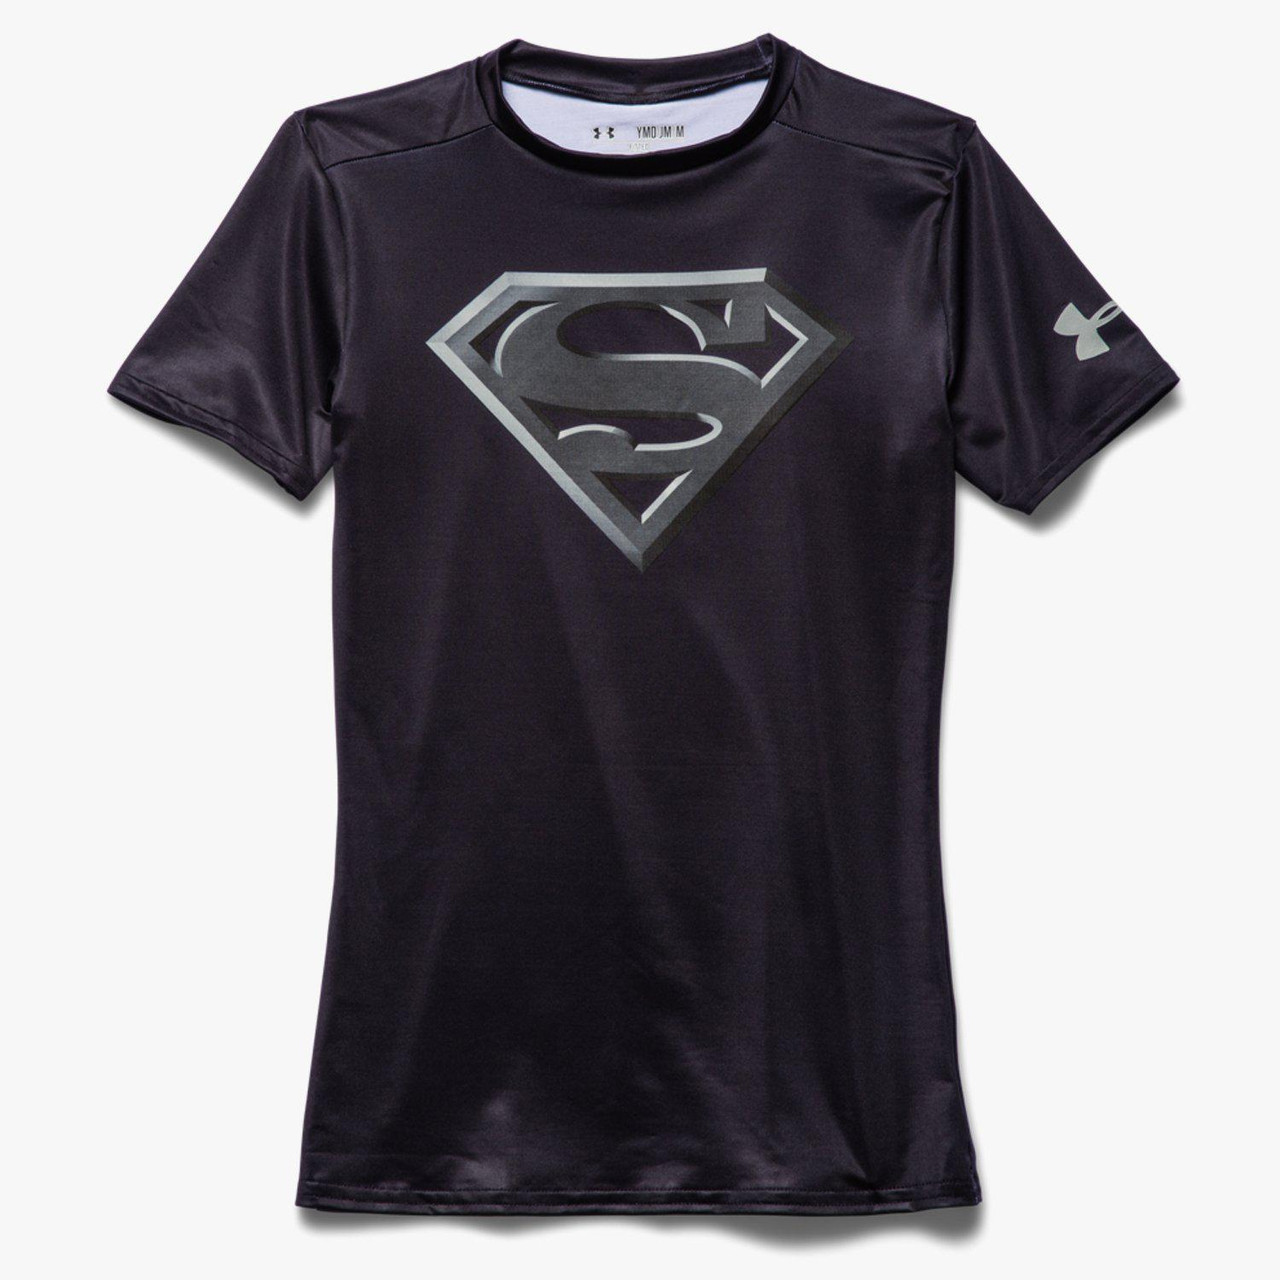 Under Armour Alter Ego Shirt Superman 1244392-005 Beacon Goods